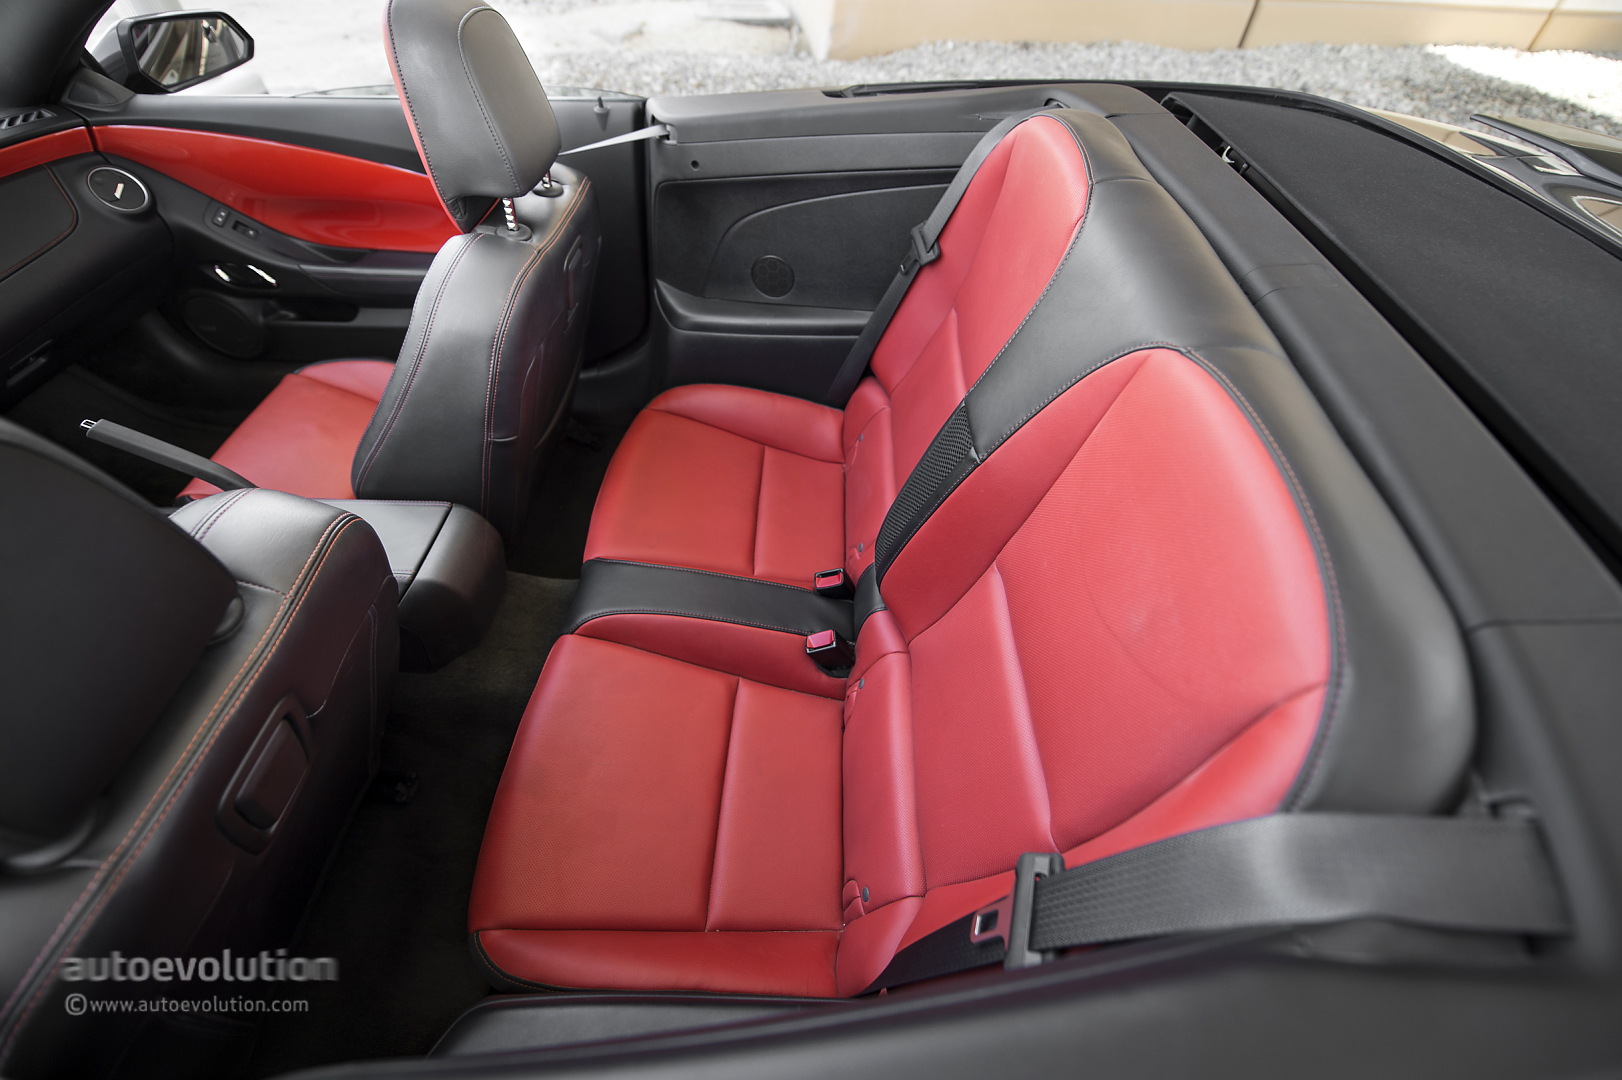 2014 CHEVROLET Camaro RS Convertible Review - autoevolution